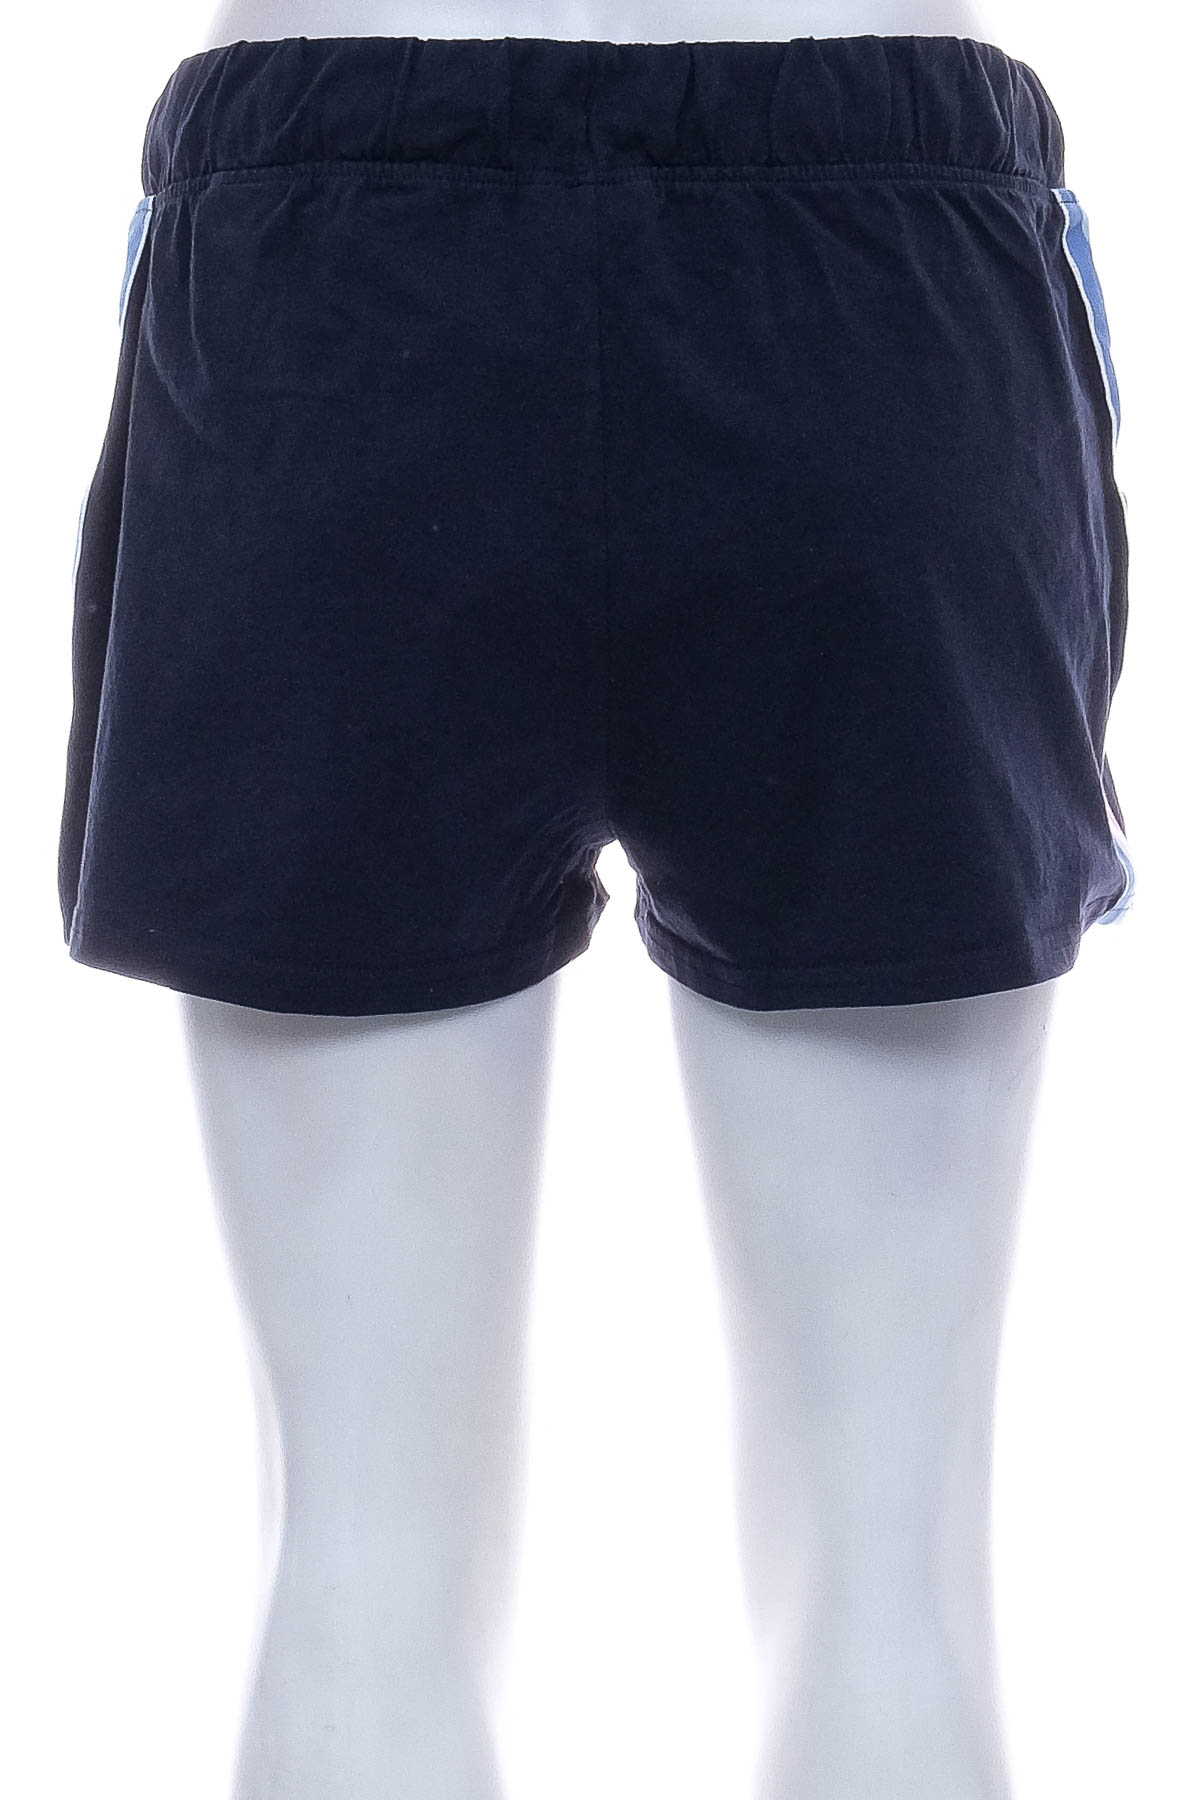 Female shorts - Flame - 1